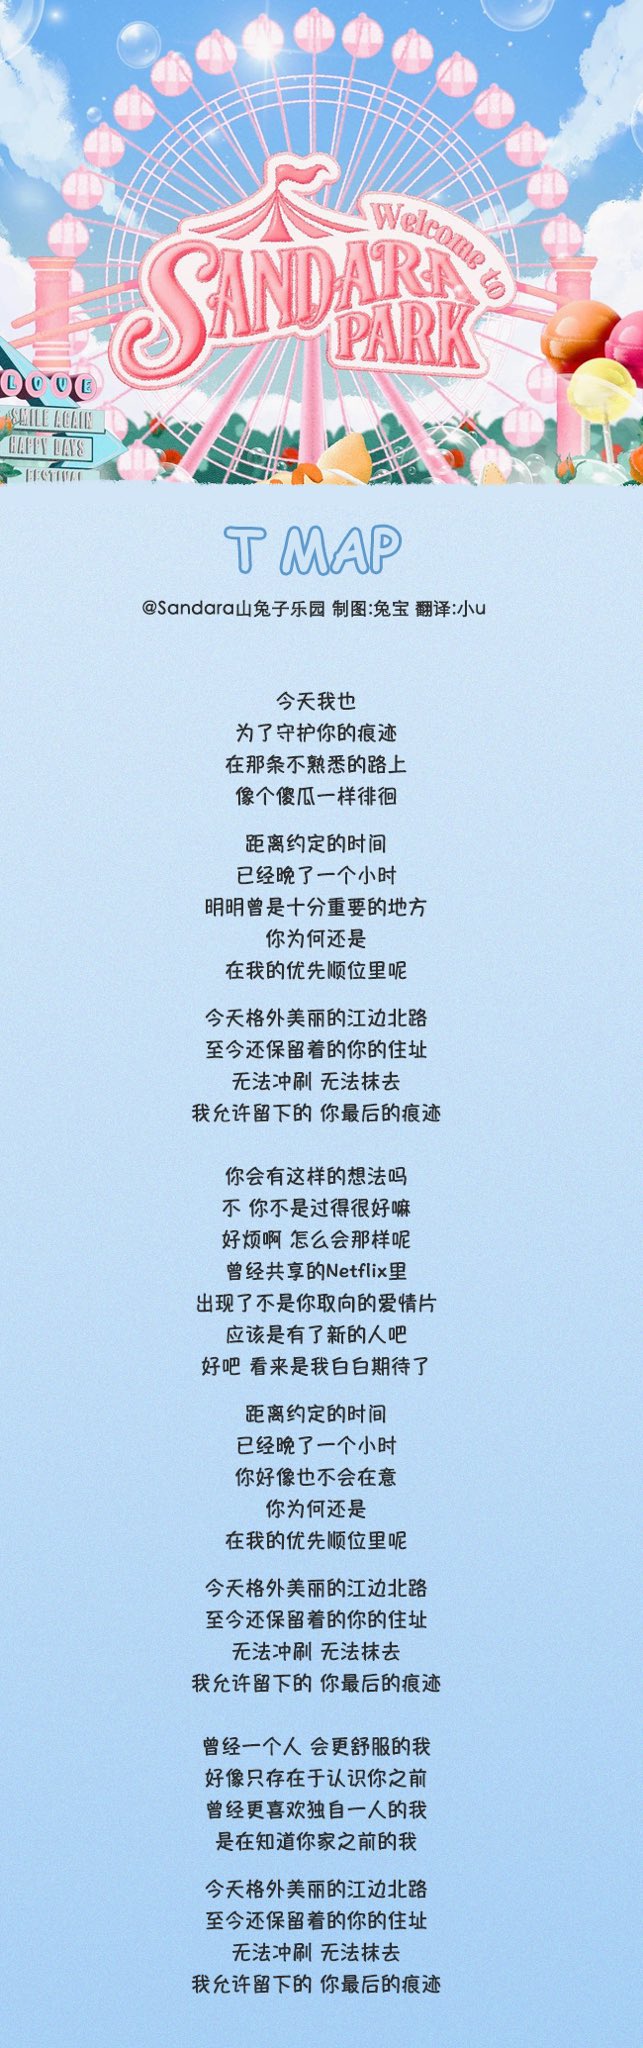 SandaraBarCHINA on X: [🎡 Lyrics in Chinese 🎠] PLAY - DARA #SandaraPark  #산다라박 #FESTIVAL  / X